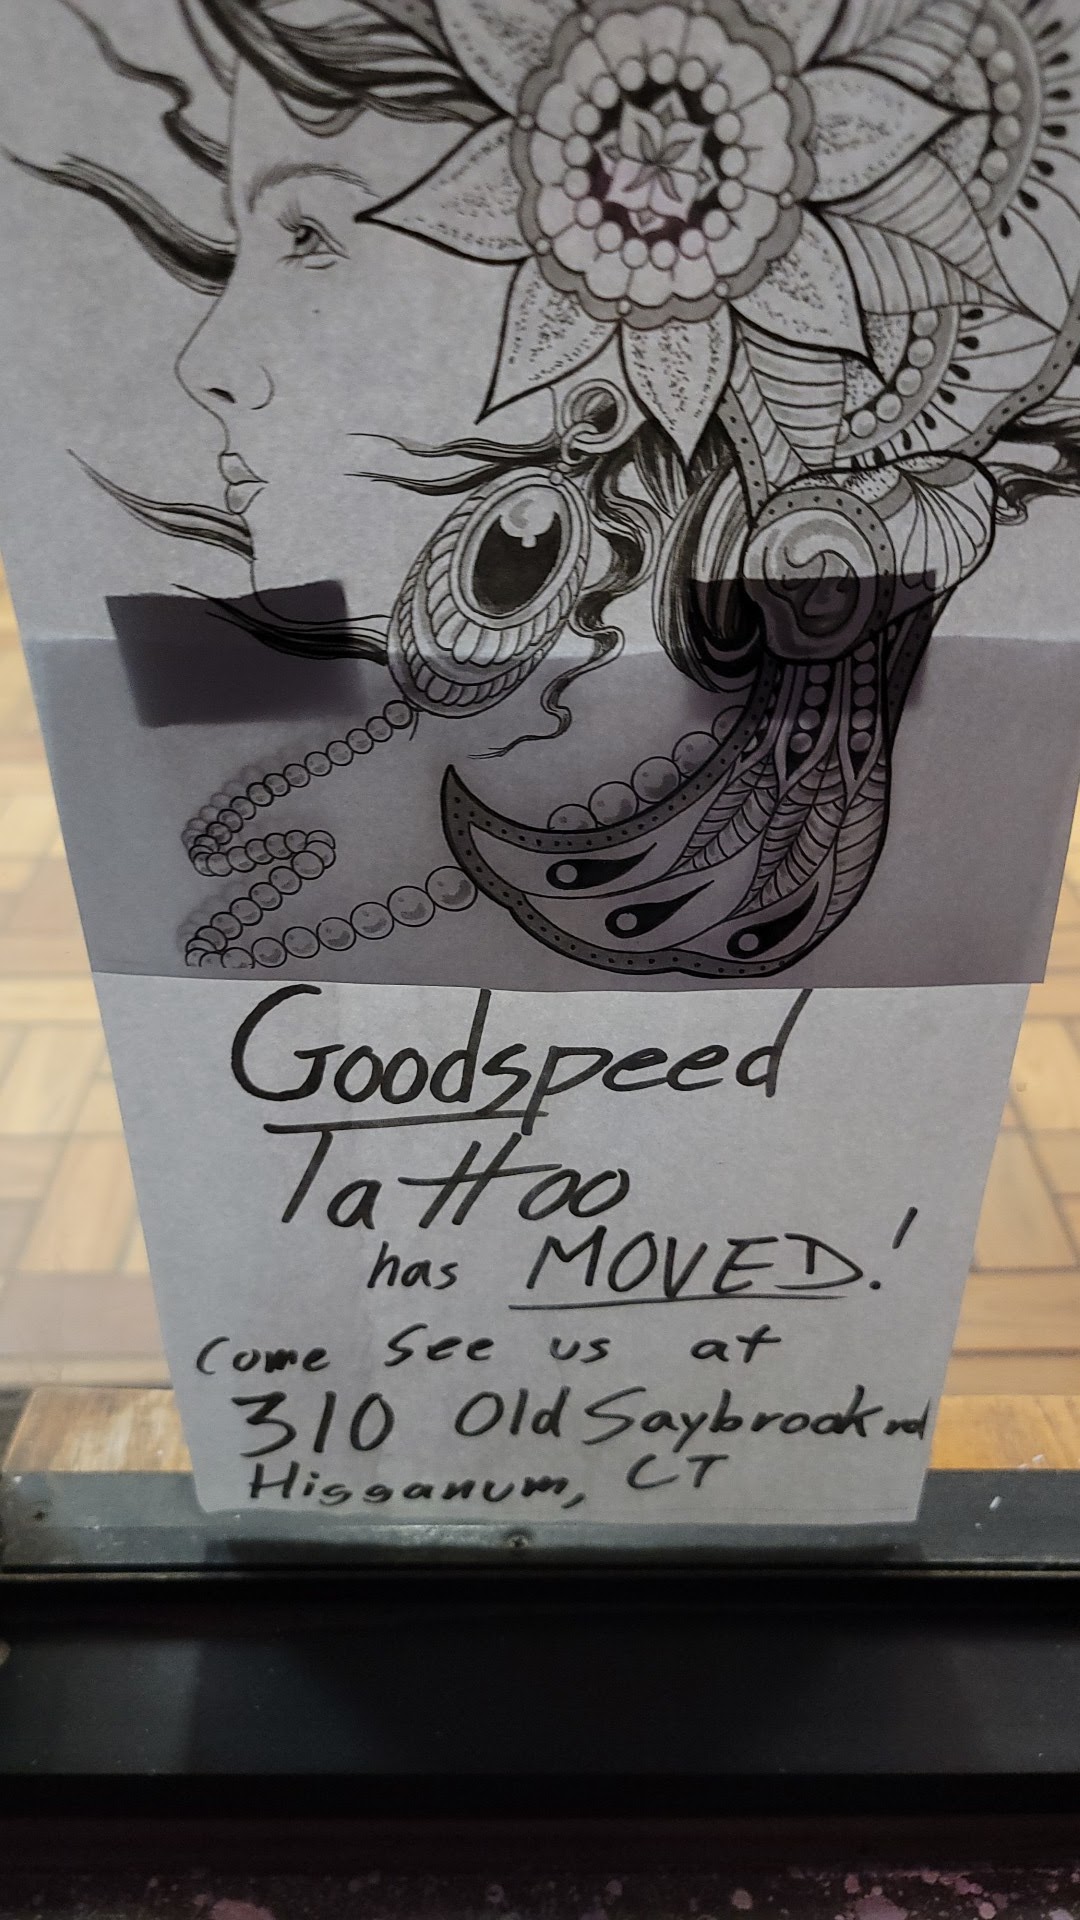 Goodspeed Tattoo 310 Saybrook Rd, Higganum Connecticut 06441